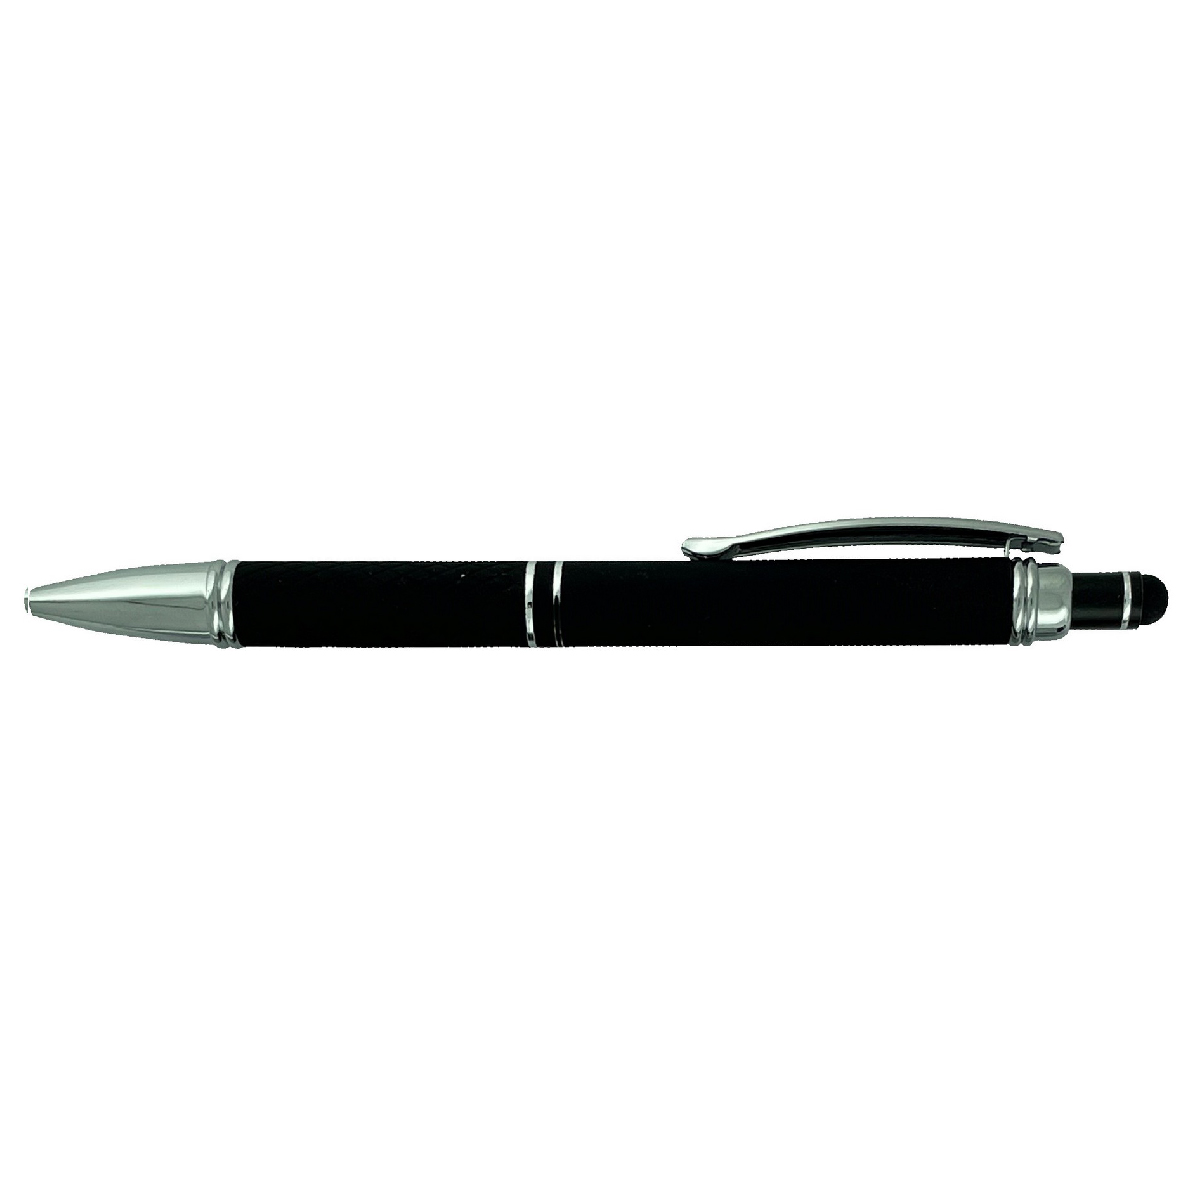 Black Arken Stylus Soft Touch Rubber Pen